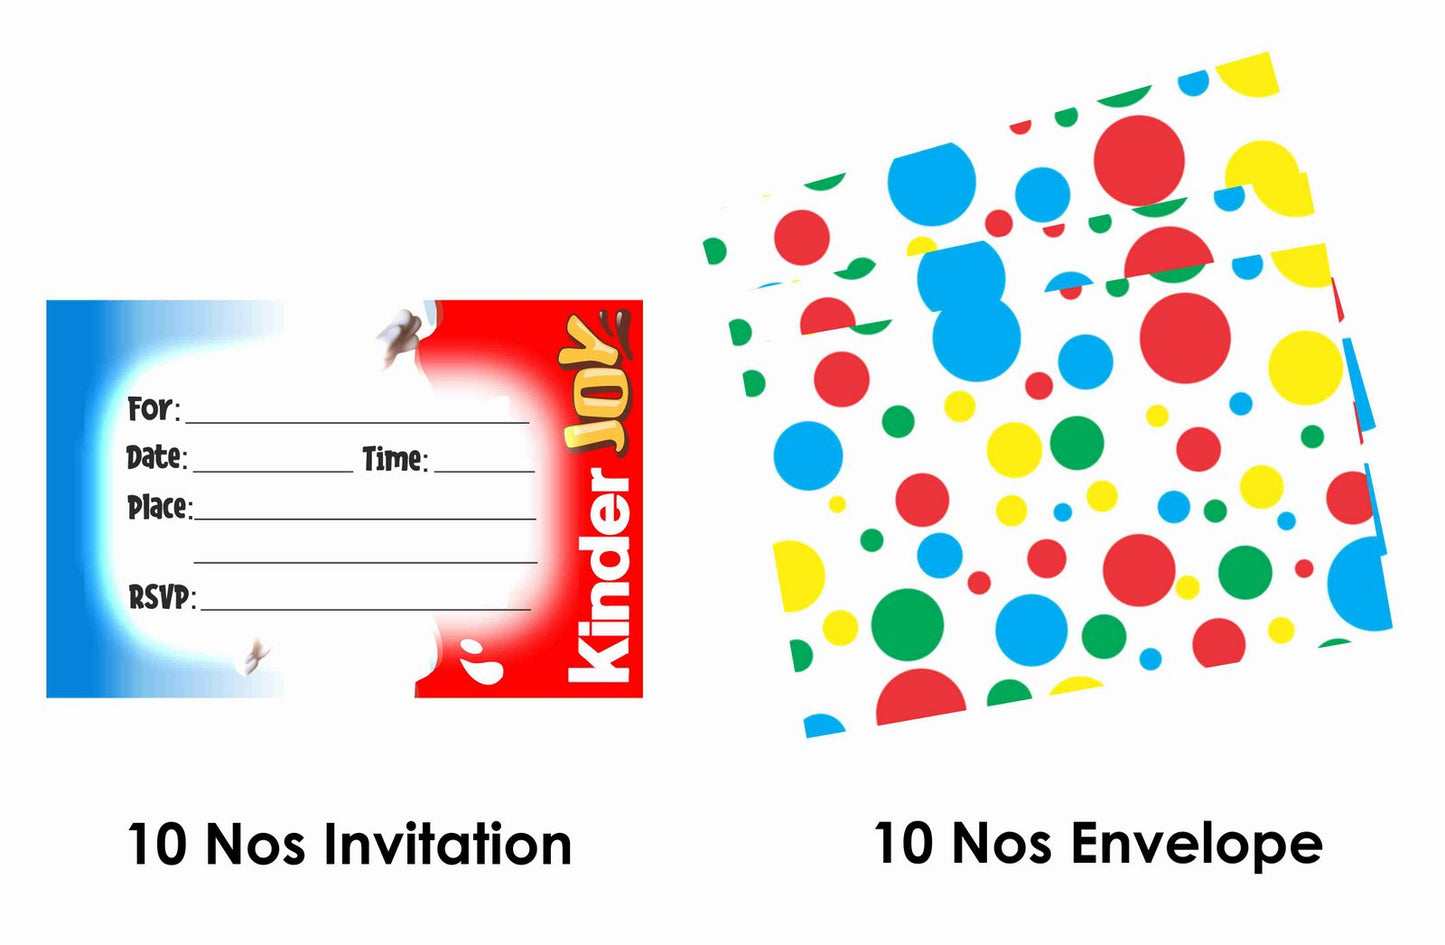 Kinderjoy Theme Children's Birthday Party Invitations Cards with Envelopes - Kids Birthday Party Invitations for Boys or Girls,- Invitation Cards (Pack of 10)